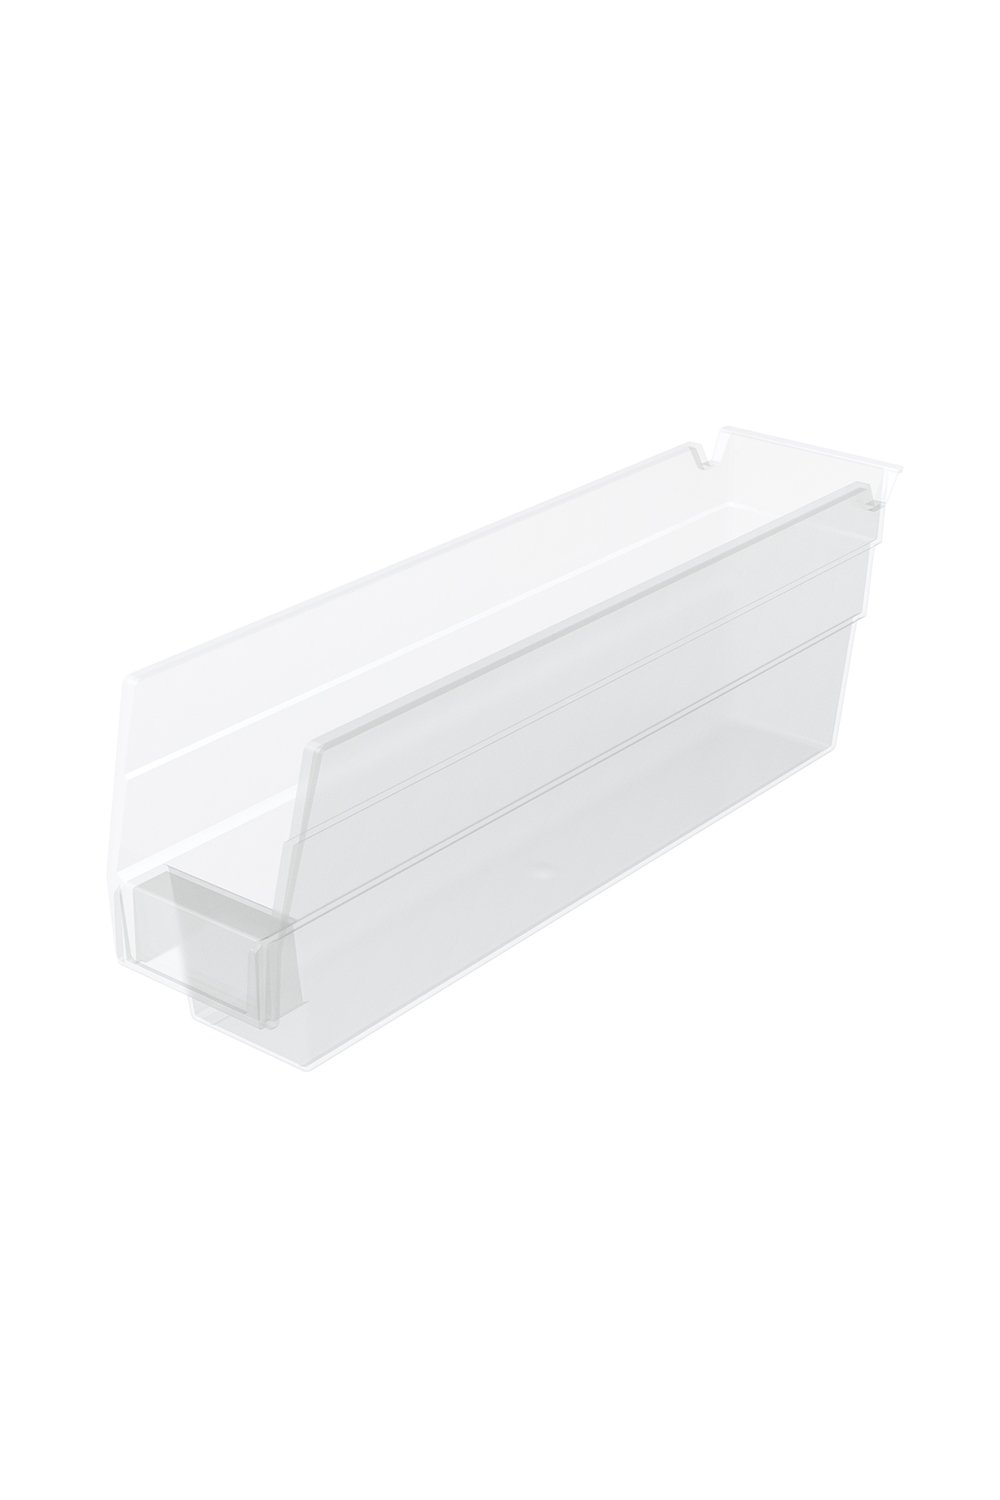 Shelf Bin for 12"D Shelves Bins & Containers Acart 11-5/8'' x 2-3/4'' x 4'' Clear 